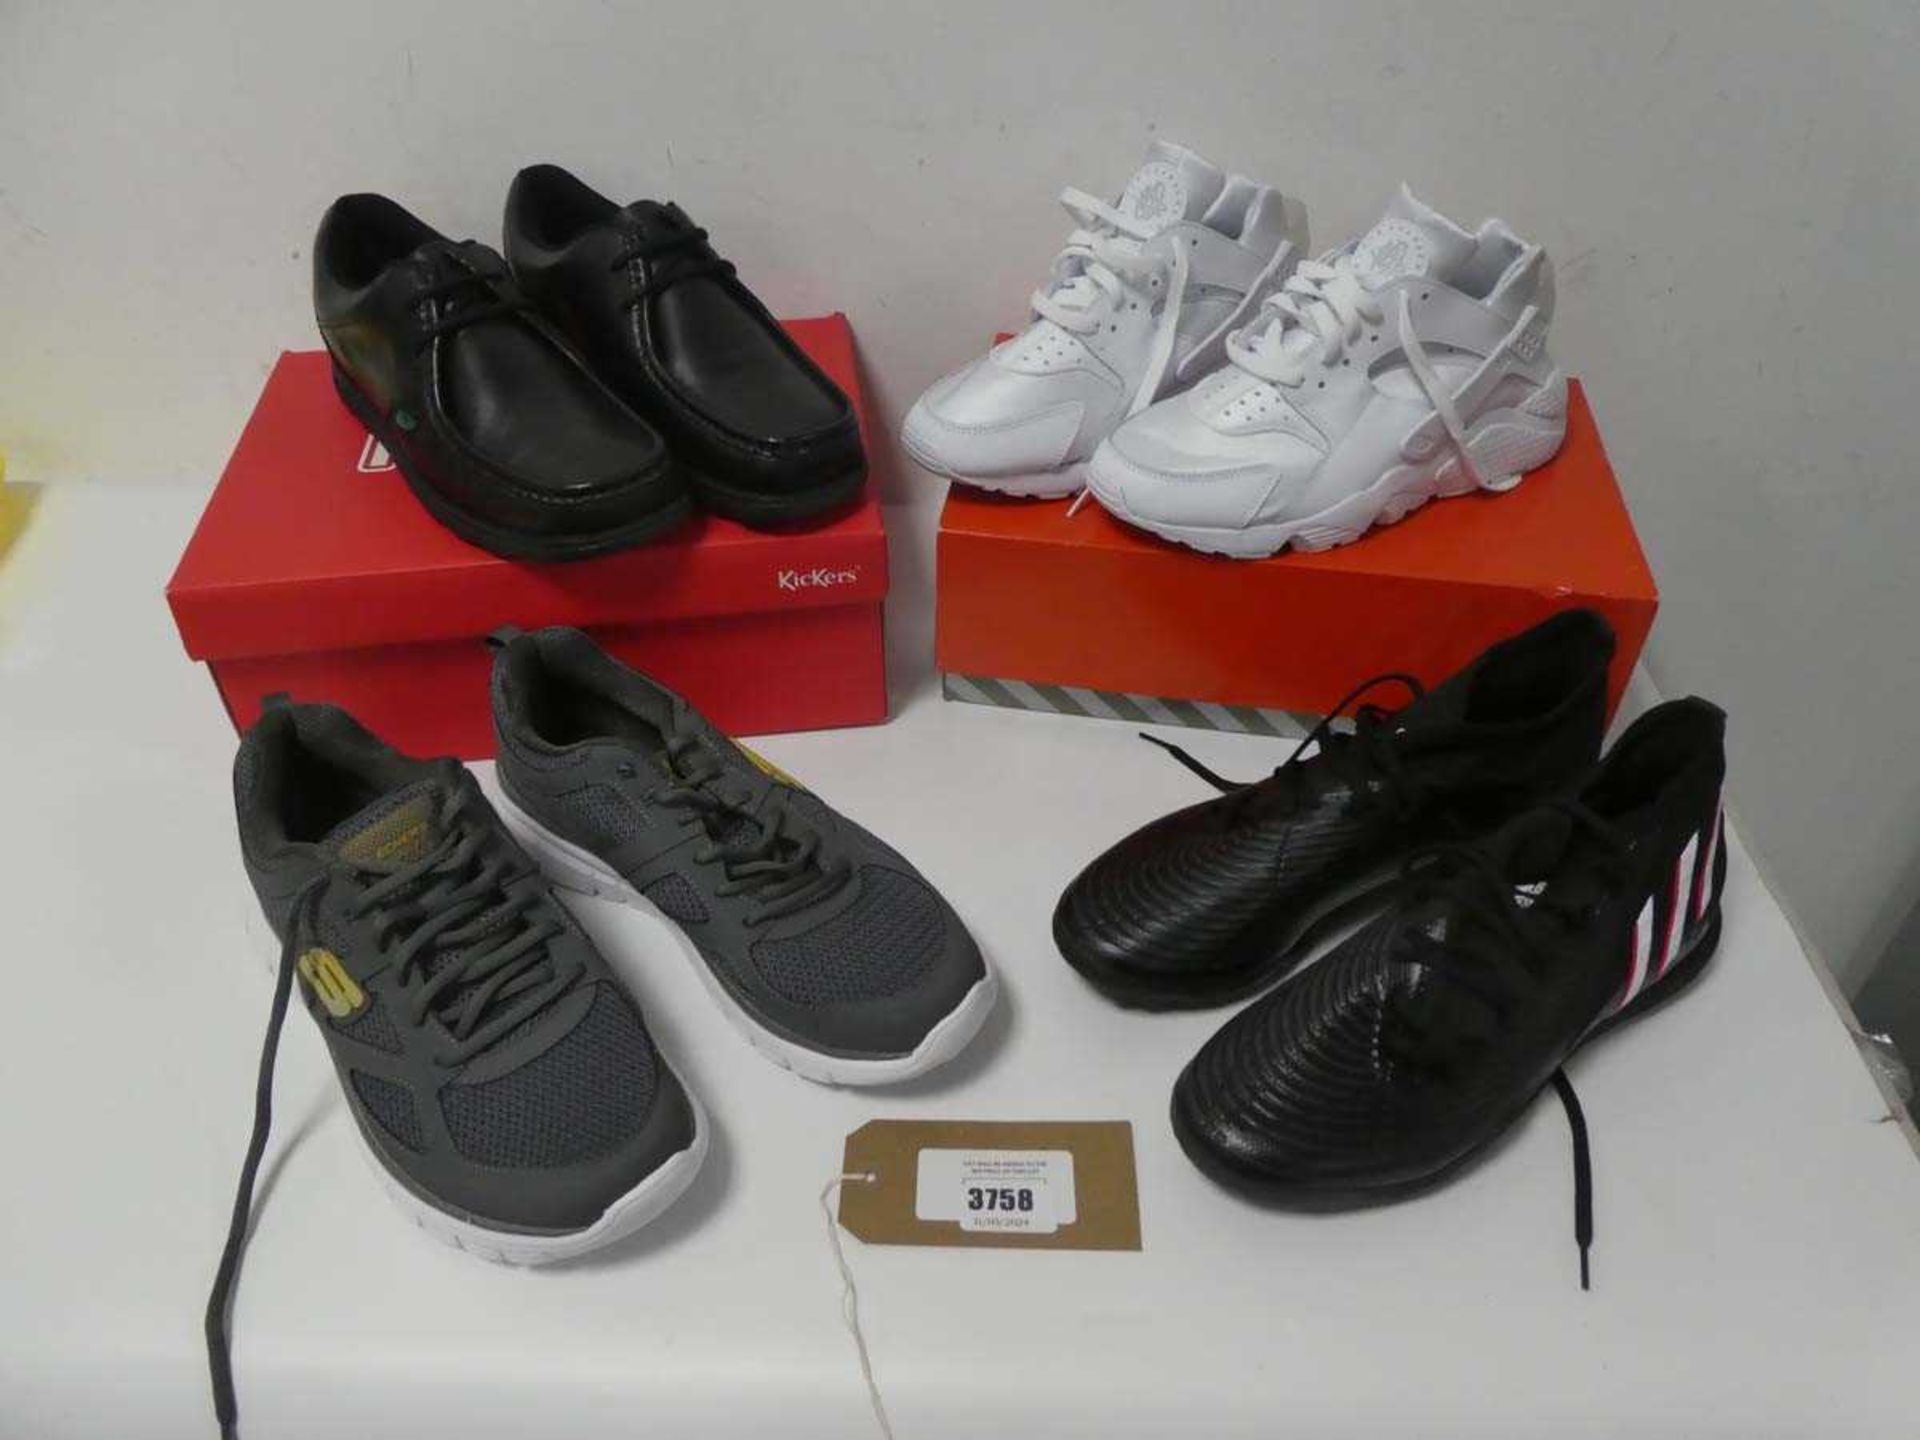 +VAT Boxed pair of Nike Air trainers, white, UK 9 + Boxed pair Kickers shoes, black, EU 44, + Pair